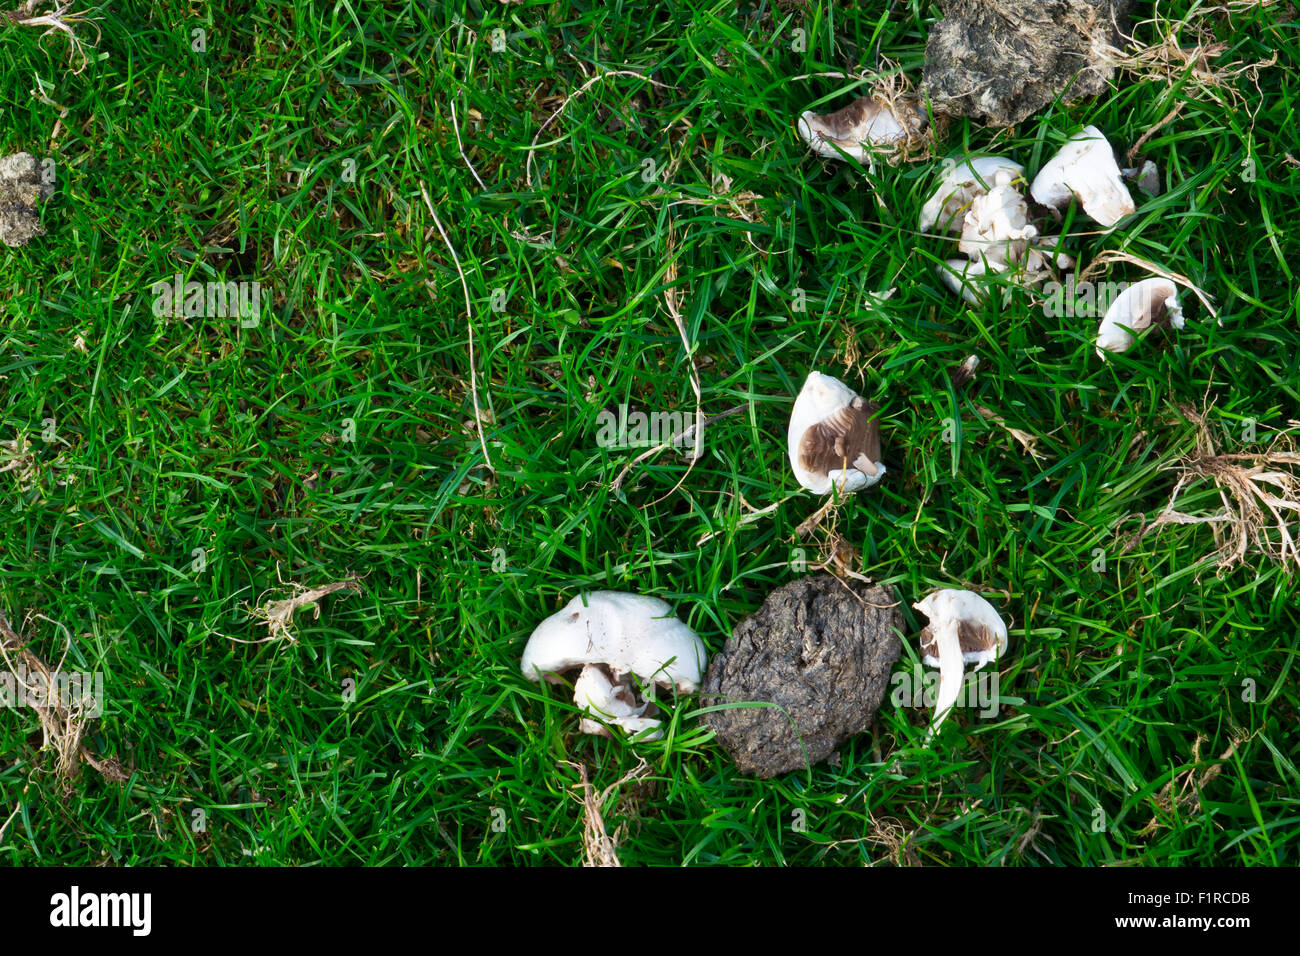 edible mushrooms in grass lawn Stock Photo